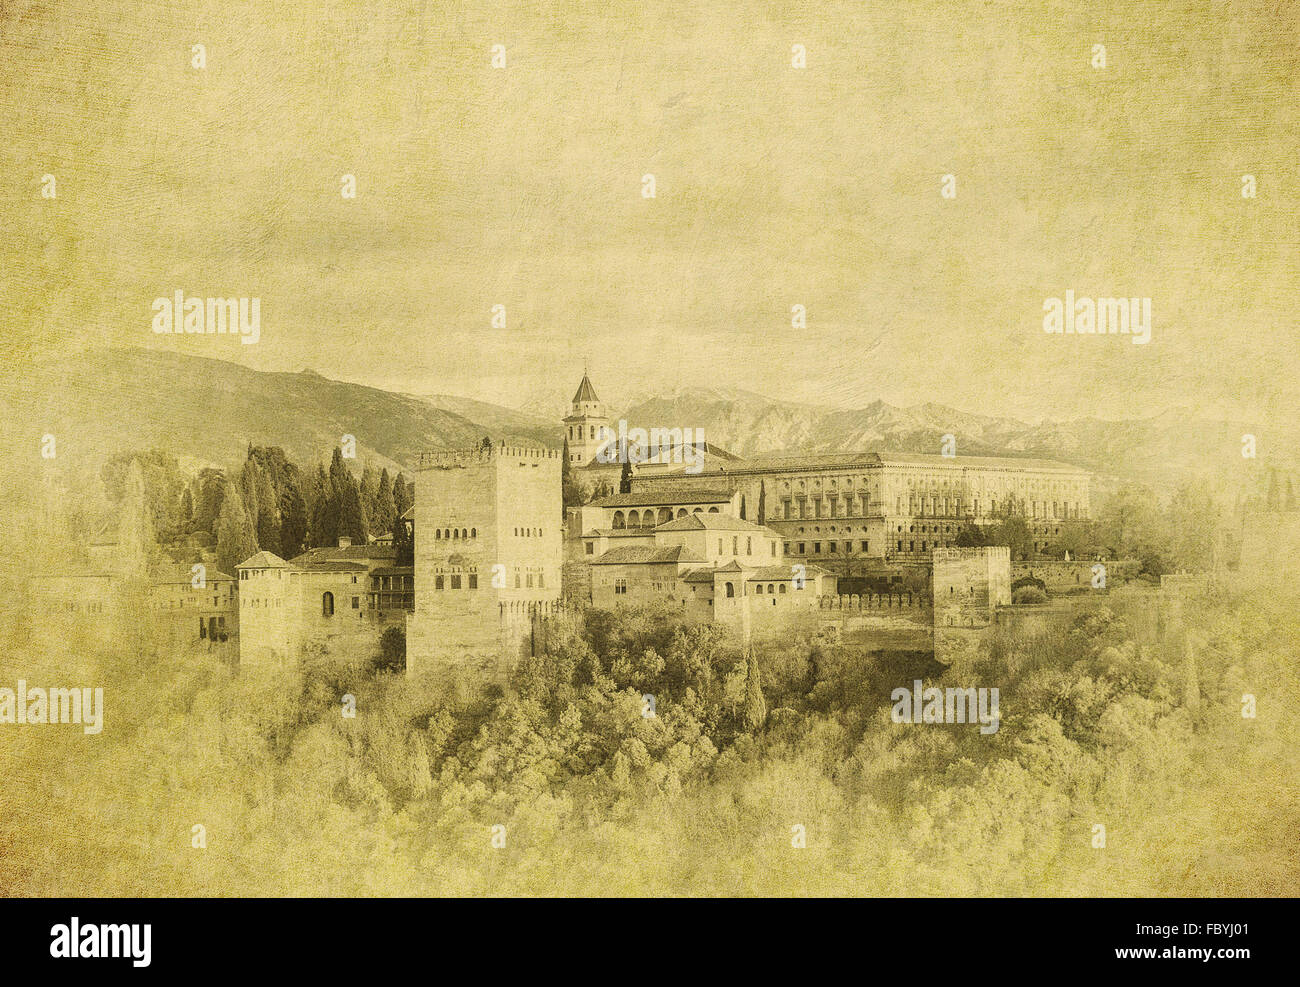 Vintage image of  of Alhambra palace, Granada, Spain Stock Photo